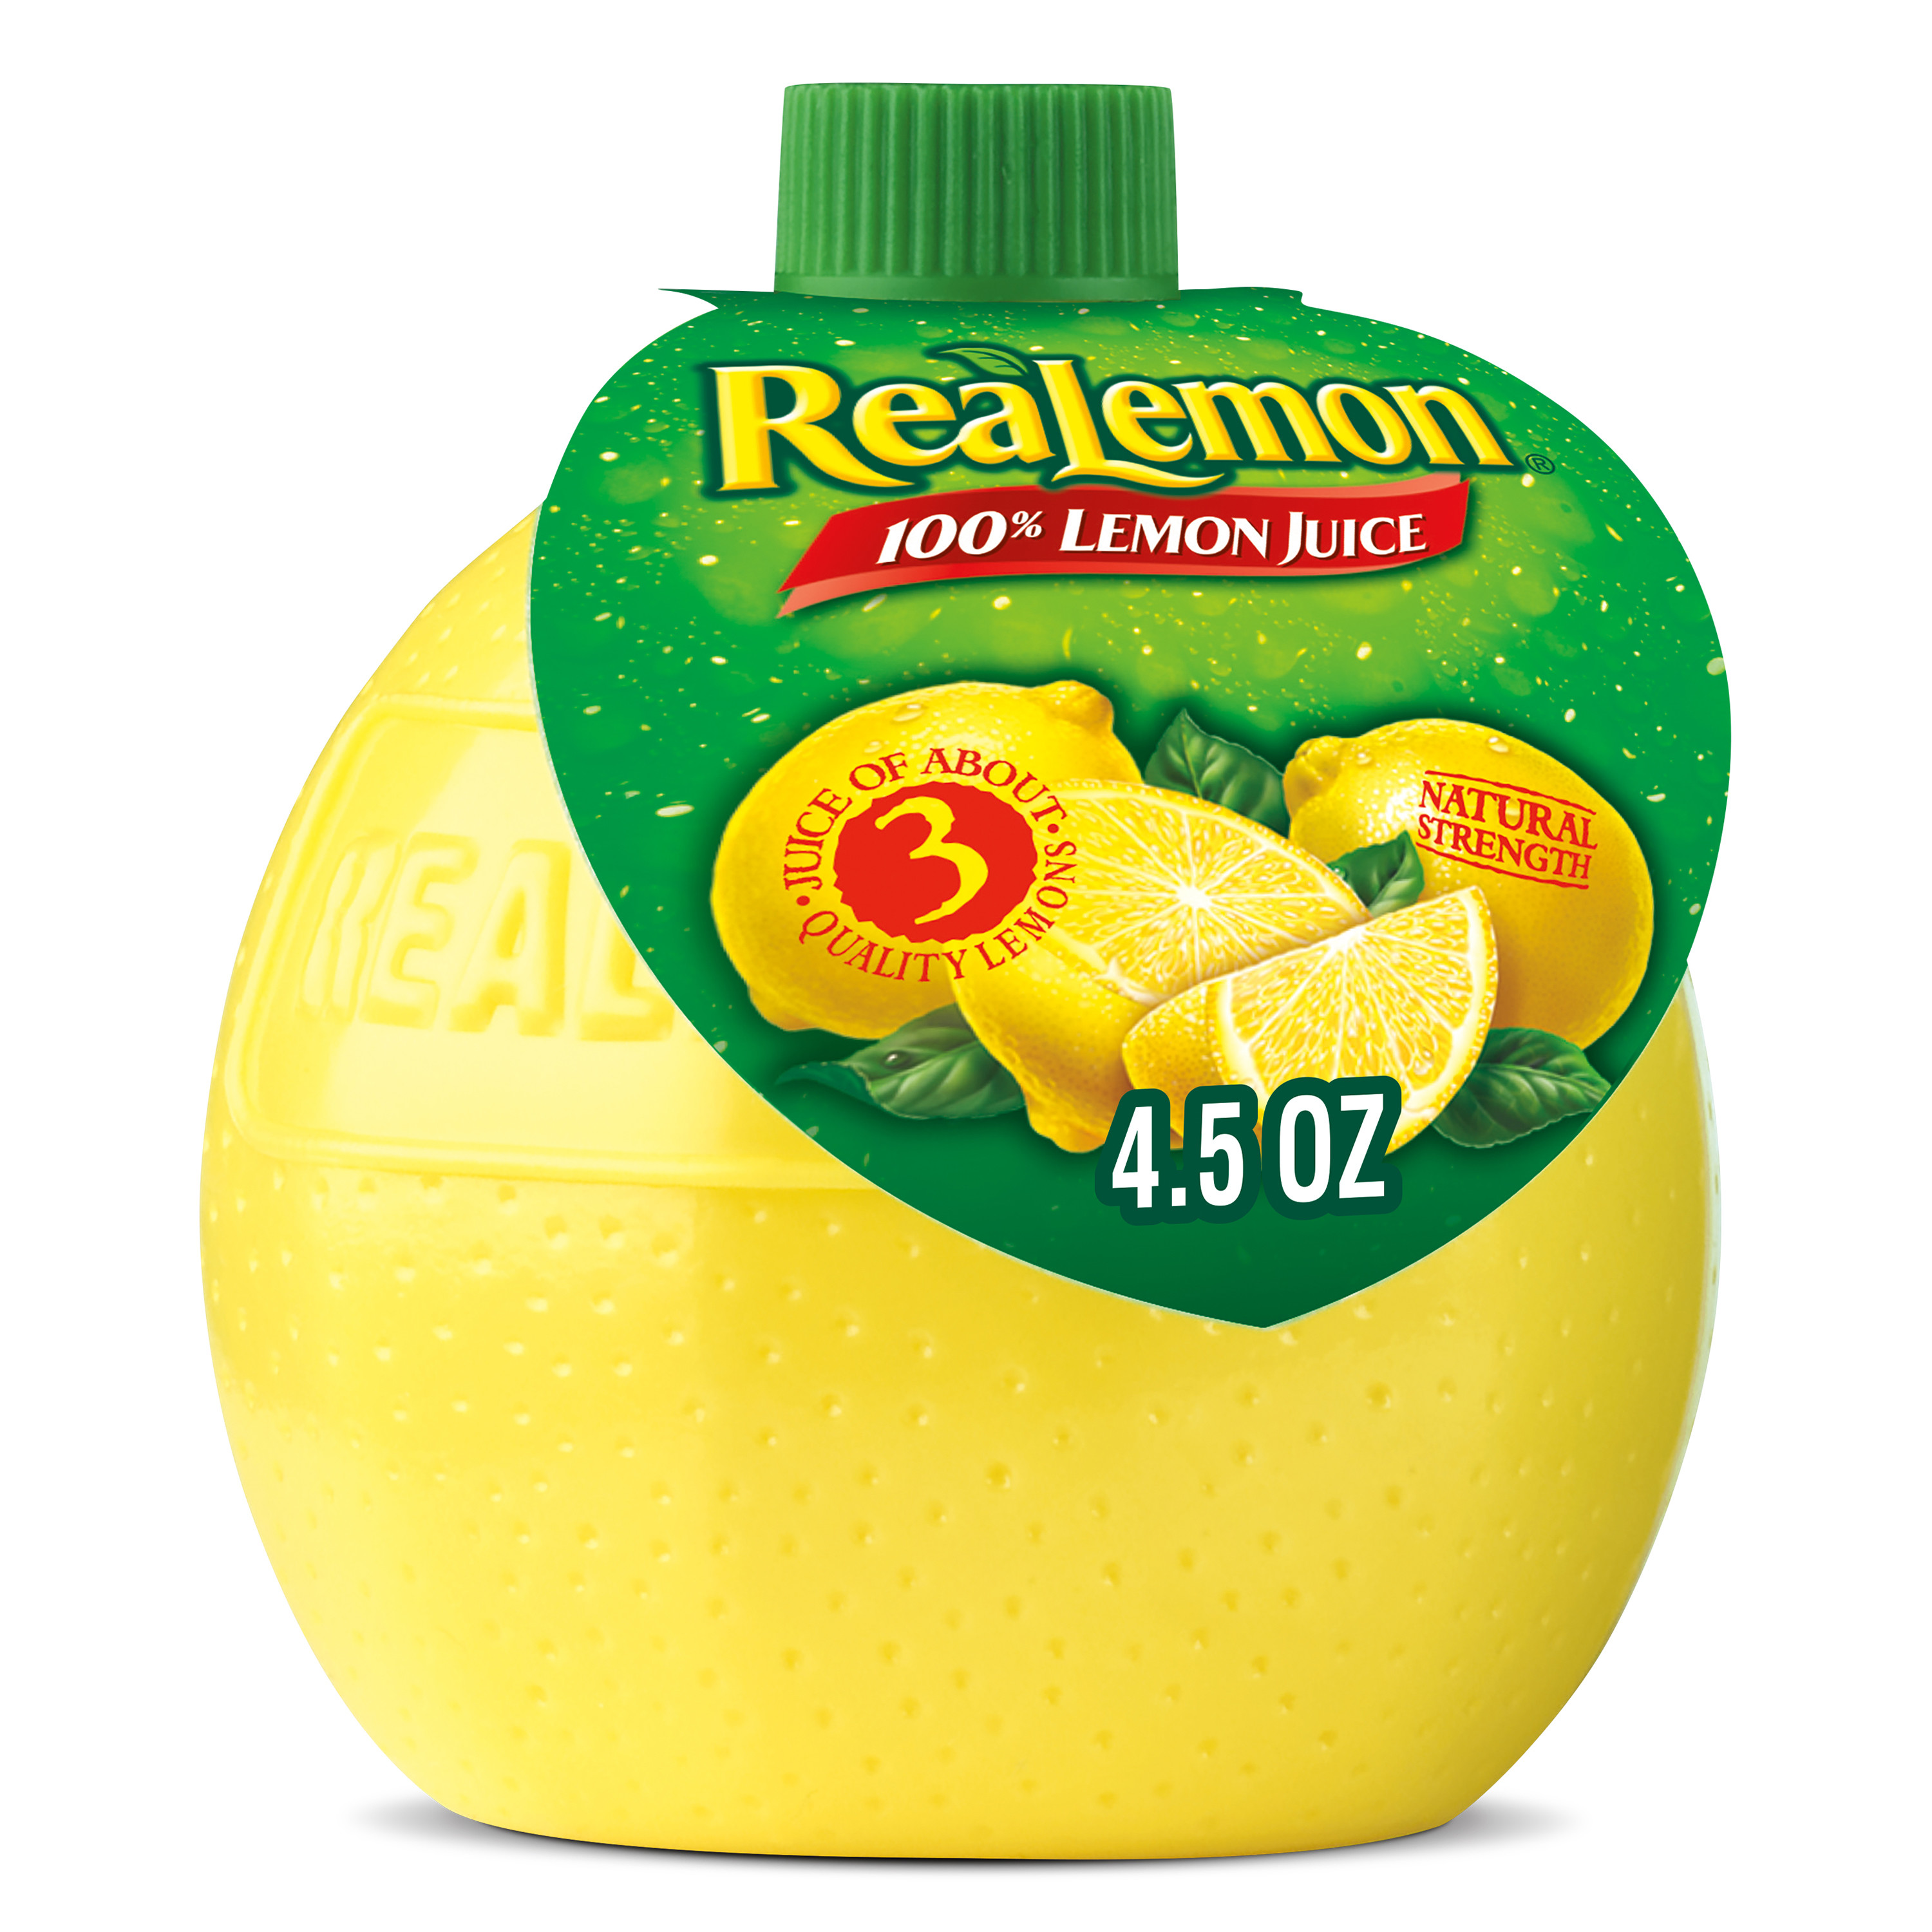 ReaLemon 100% Lemon Juice, 4.5 fl oz bottle - image 1 of 5